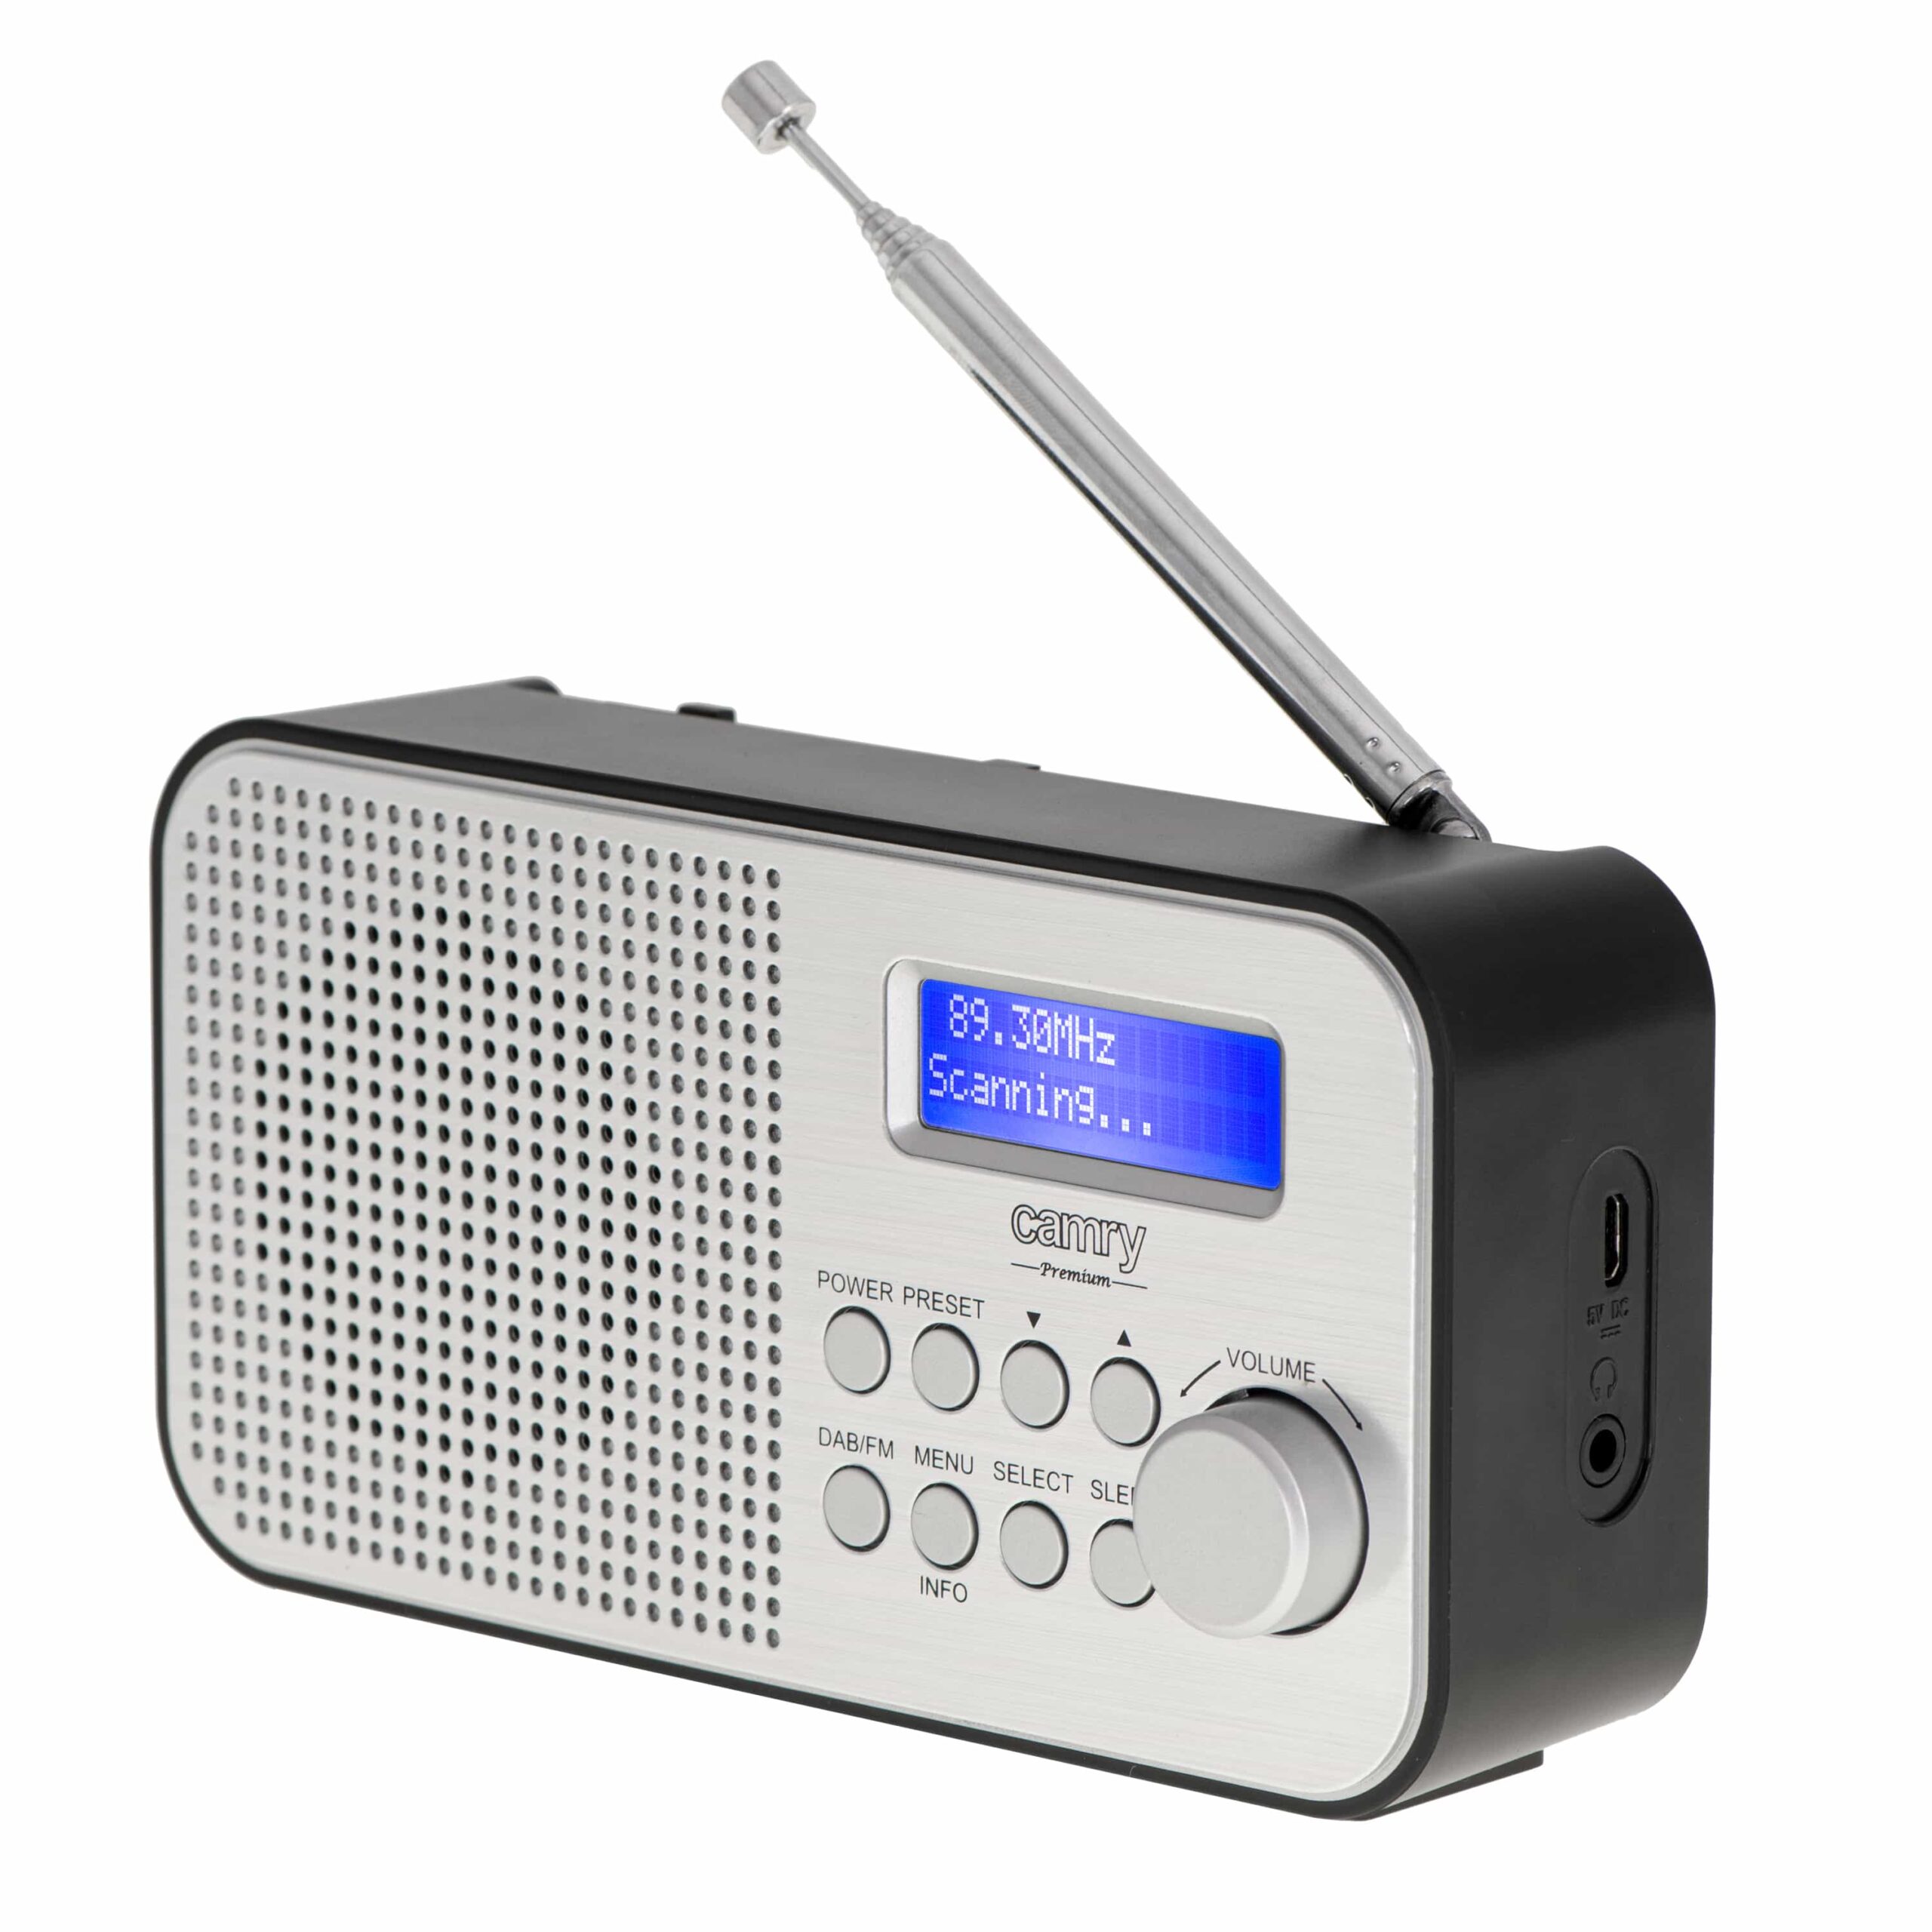 Camry CR 1179 DAB/DAB+/FM radio